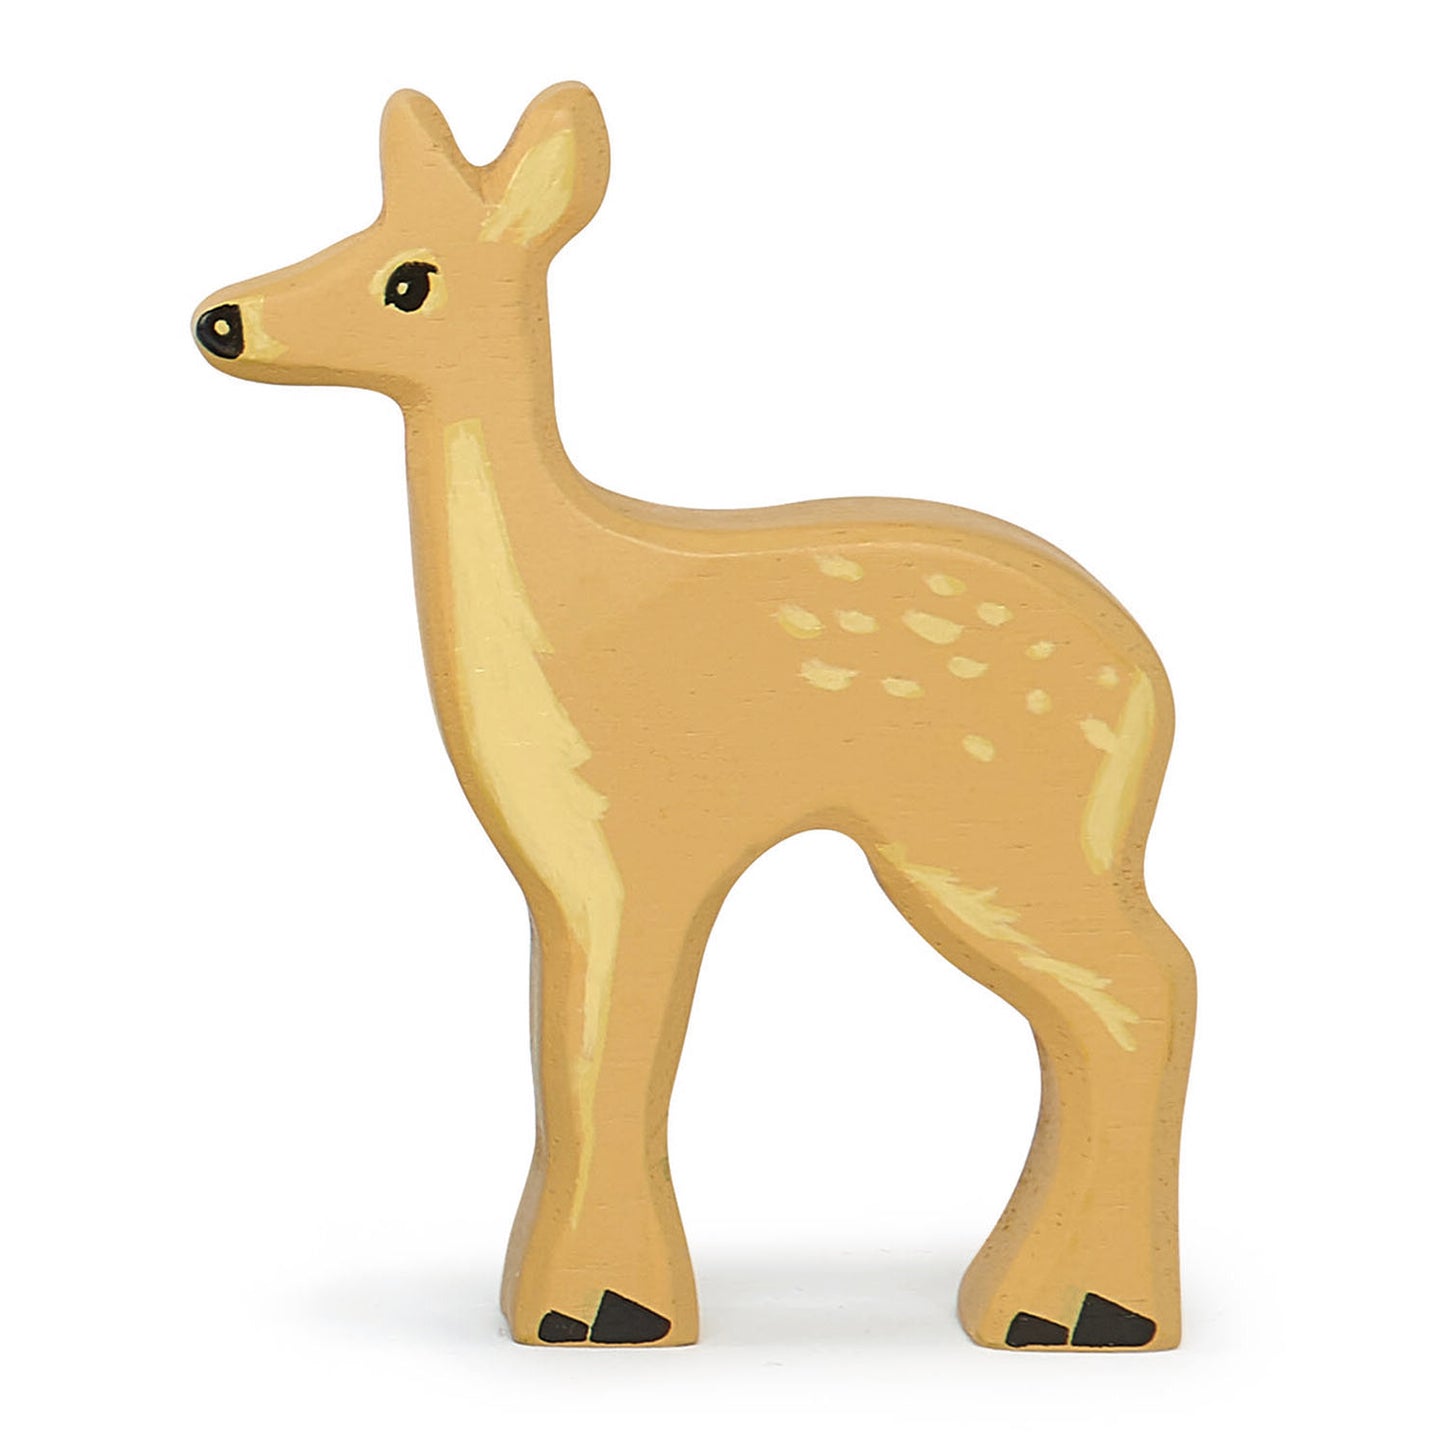 Front view of wooden fallow deer figurine